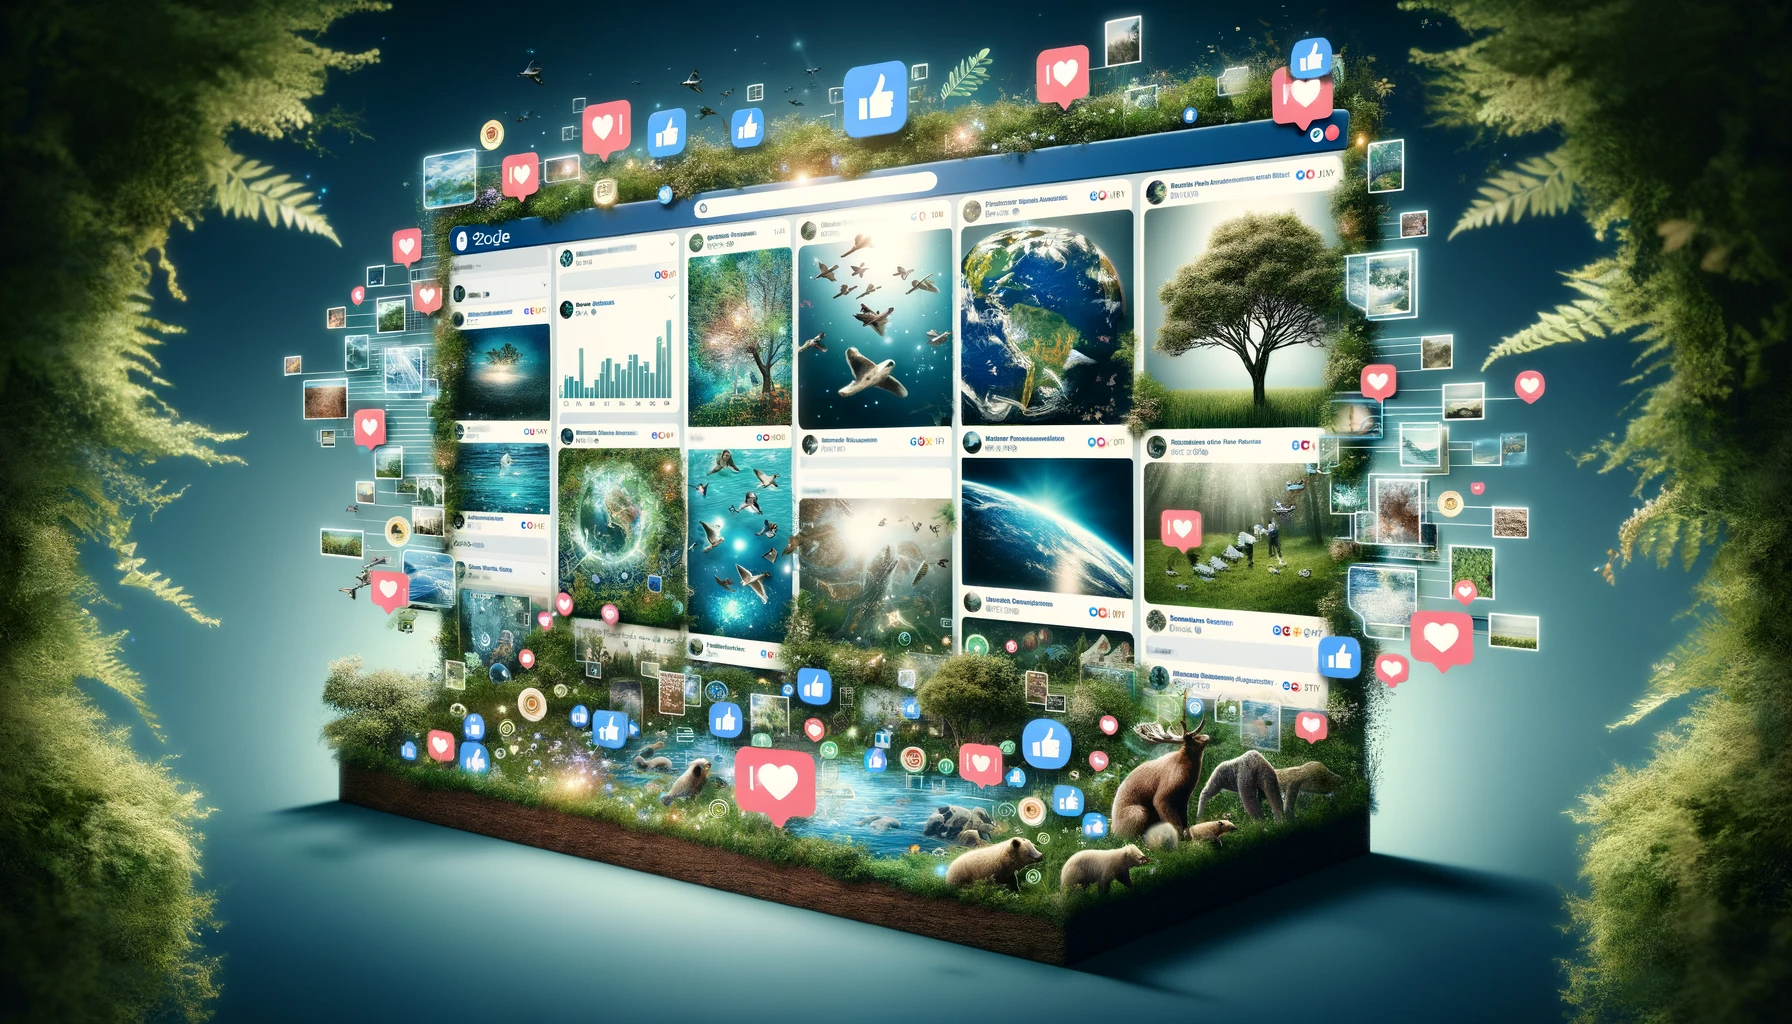 environmental campaigns via social media networks